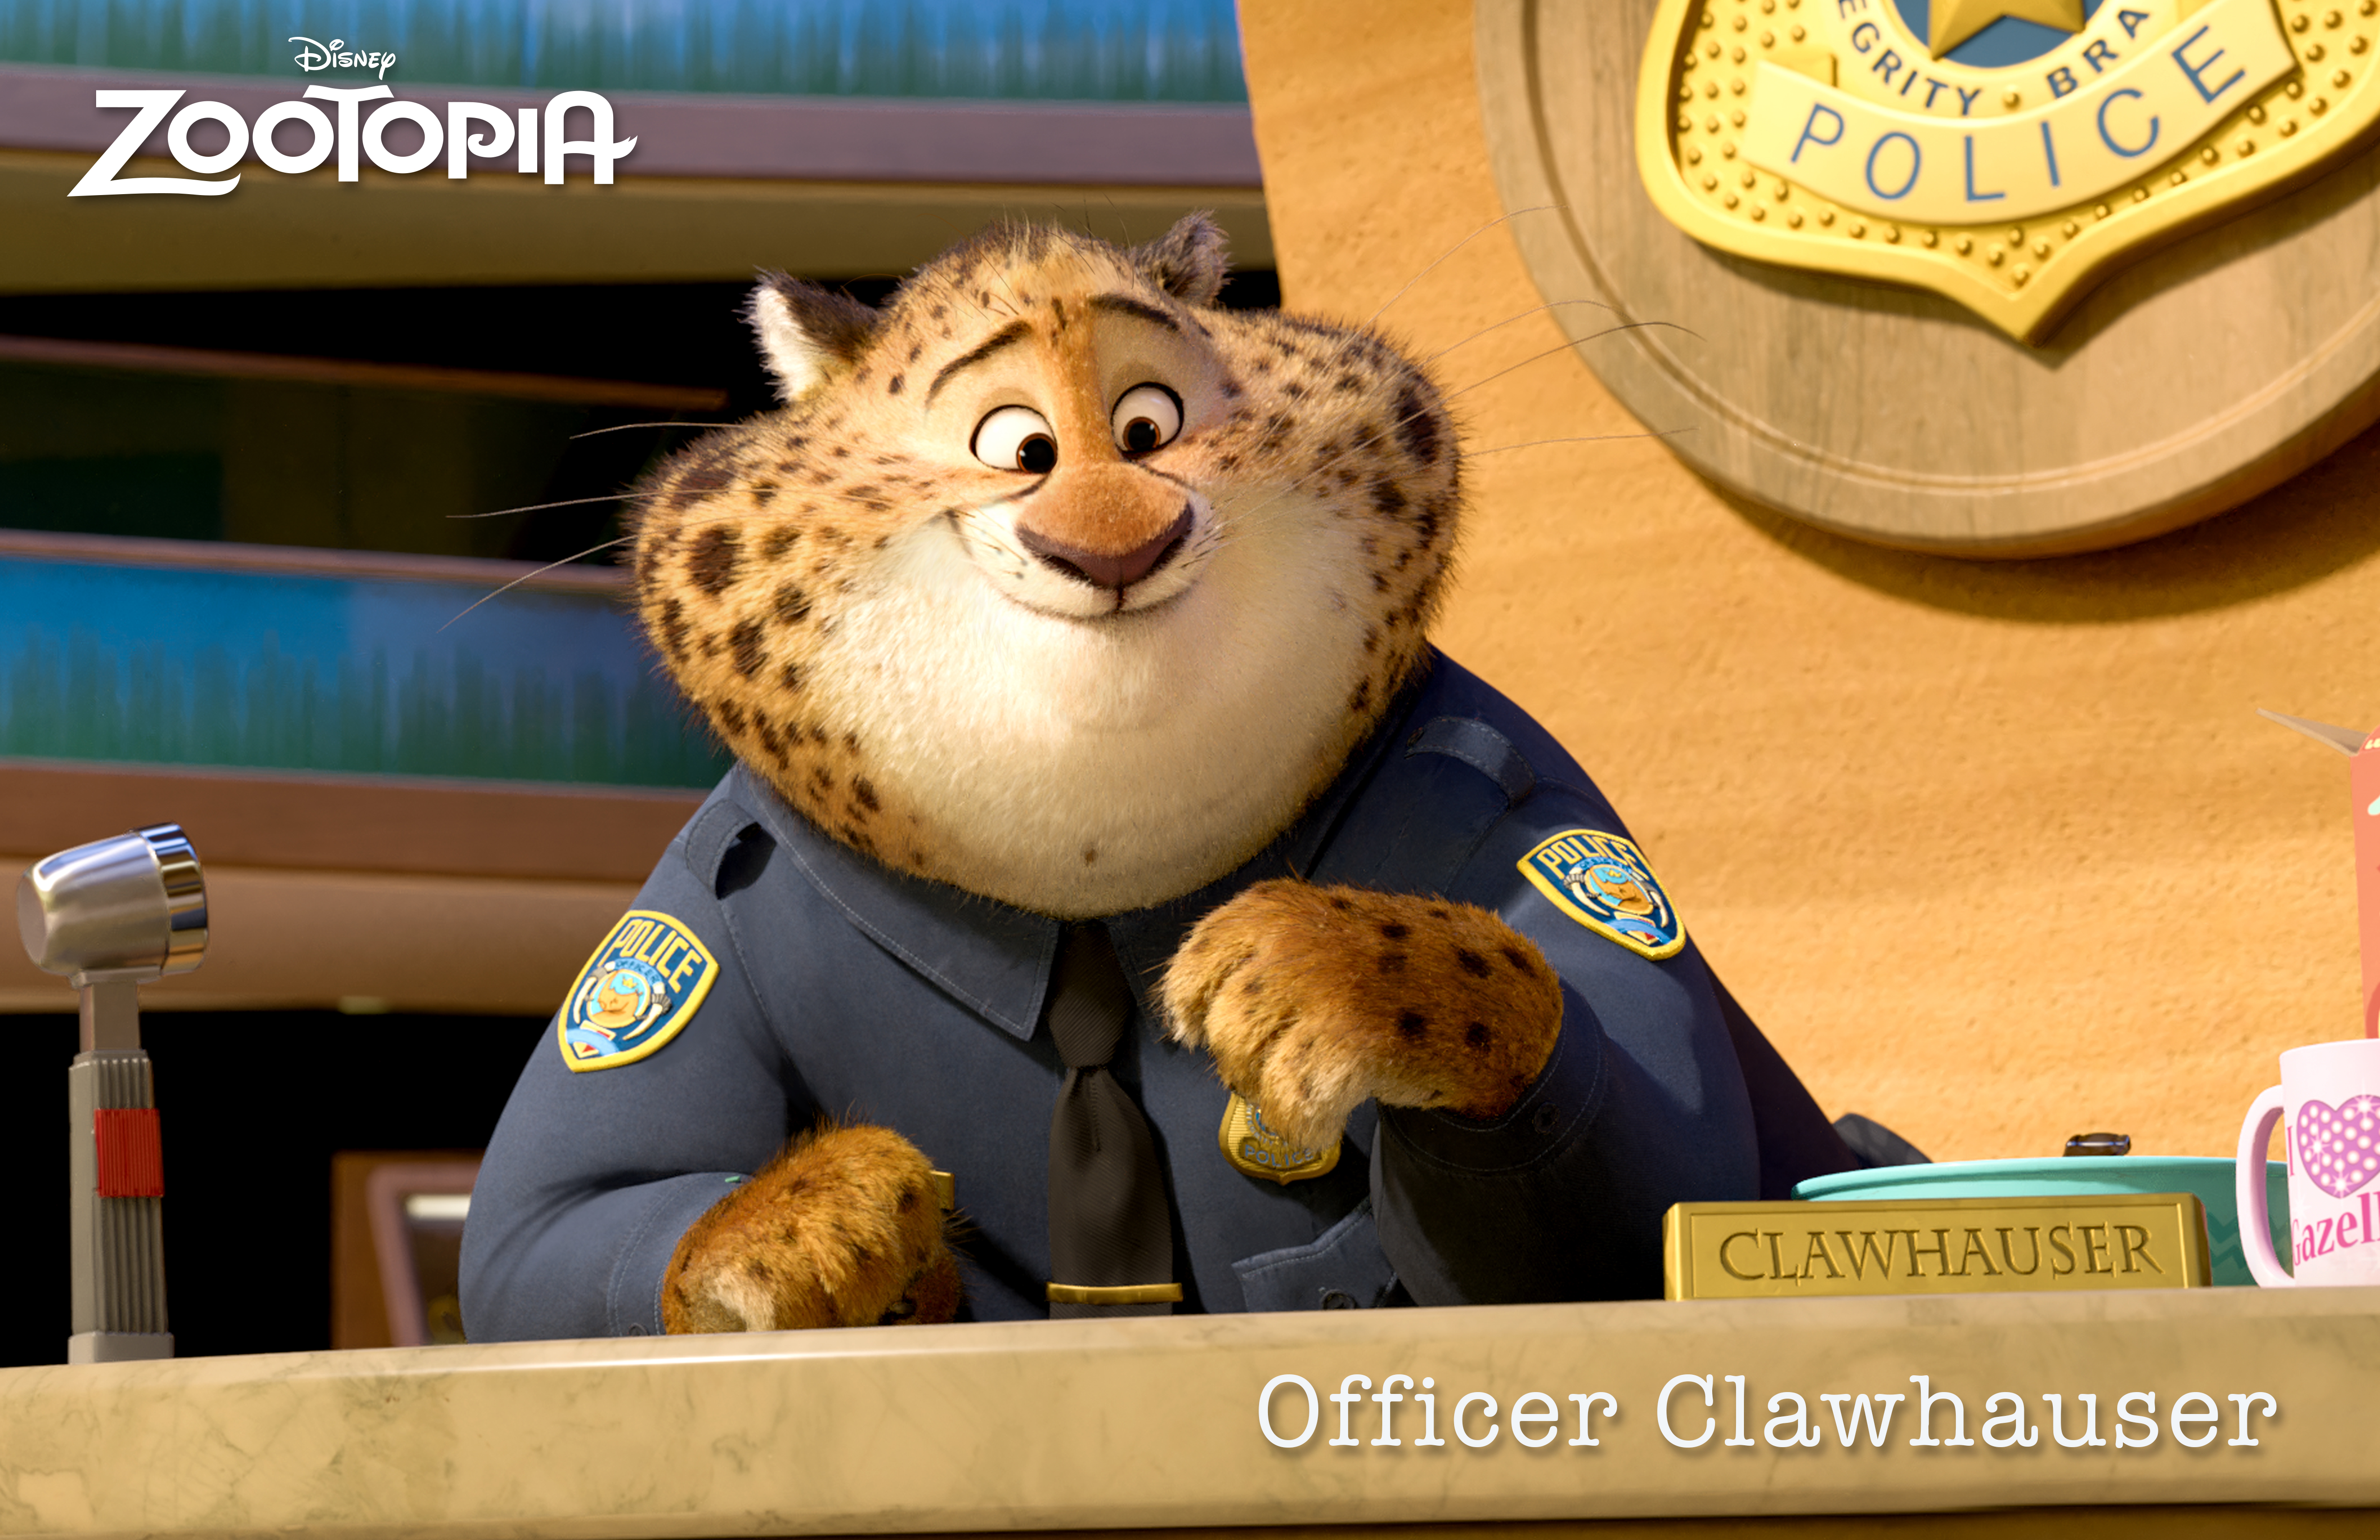 http://www.yeniyeniseyler.com/wp-content/uploads/2015/10/Zootopia-Officer-Clawhauser.jpg